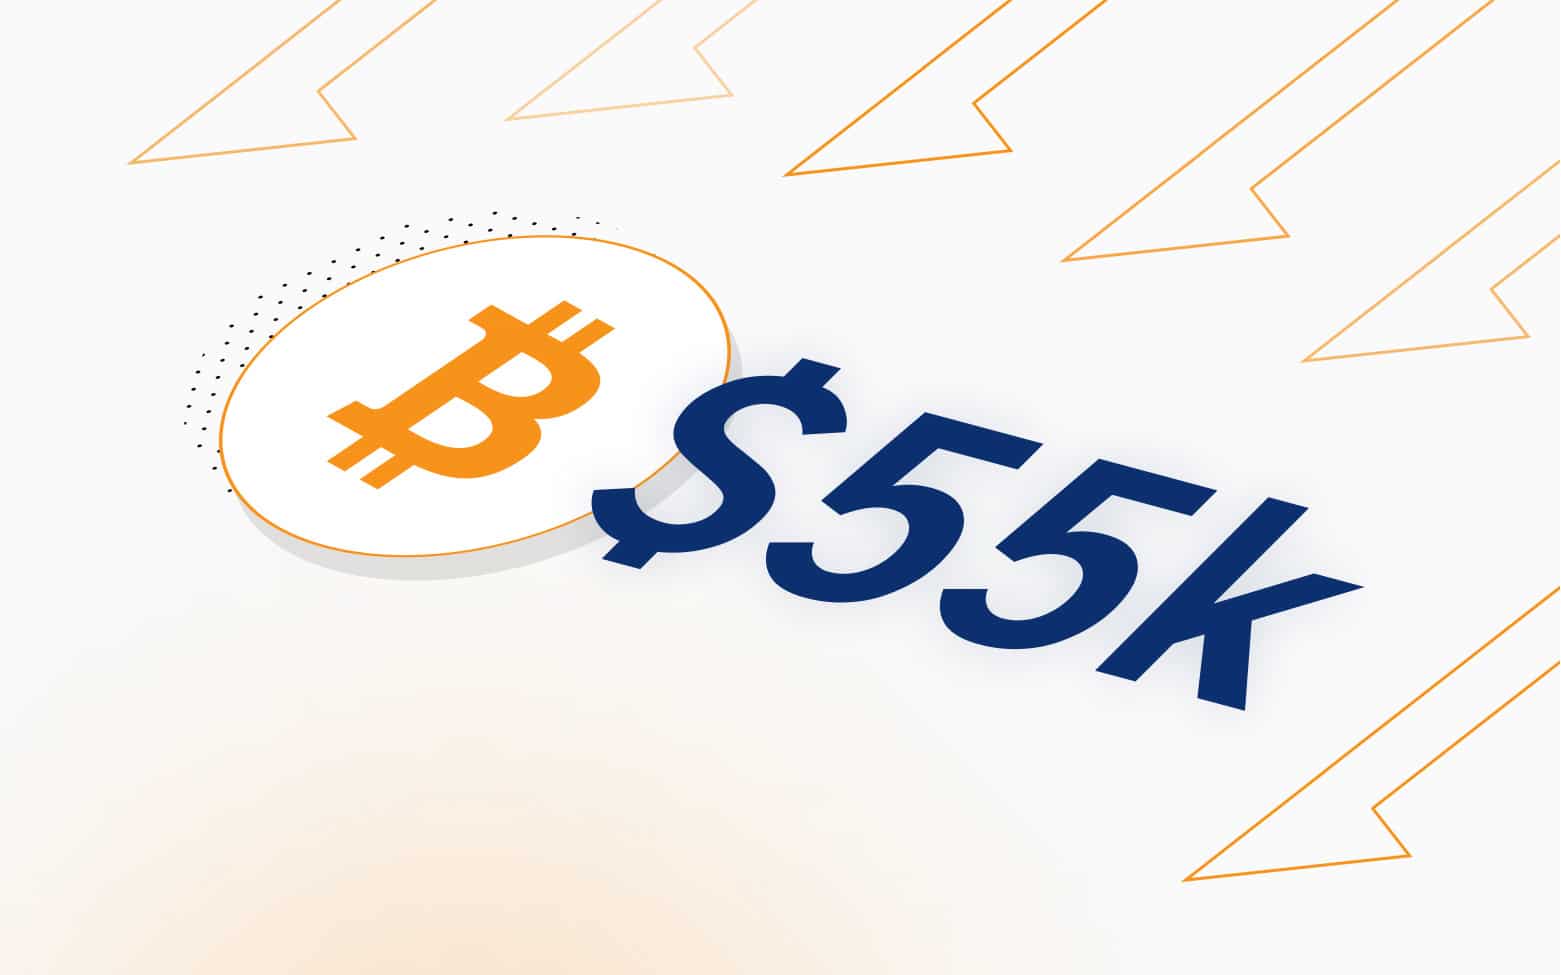 Bitcoin’s-Weekly-Rise-Halts-as-Price-Dips-Below-$55,000